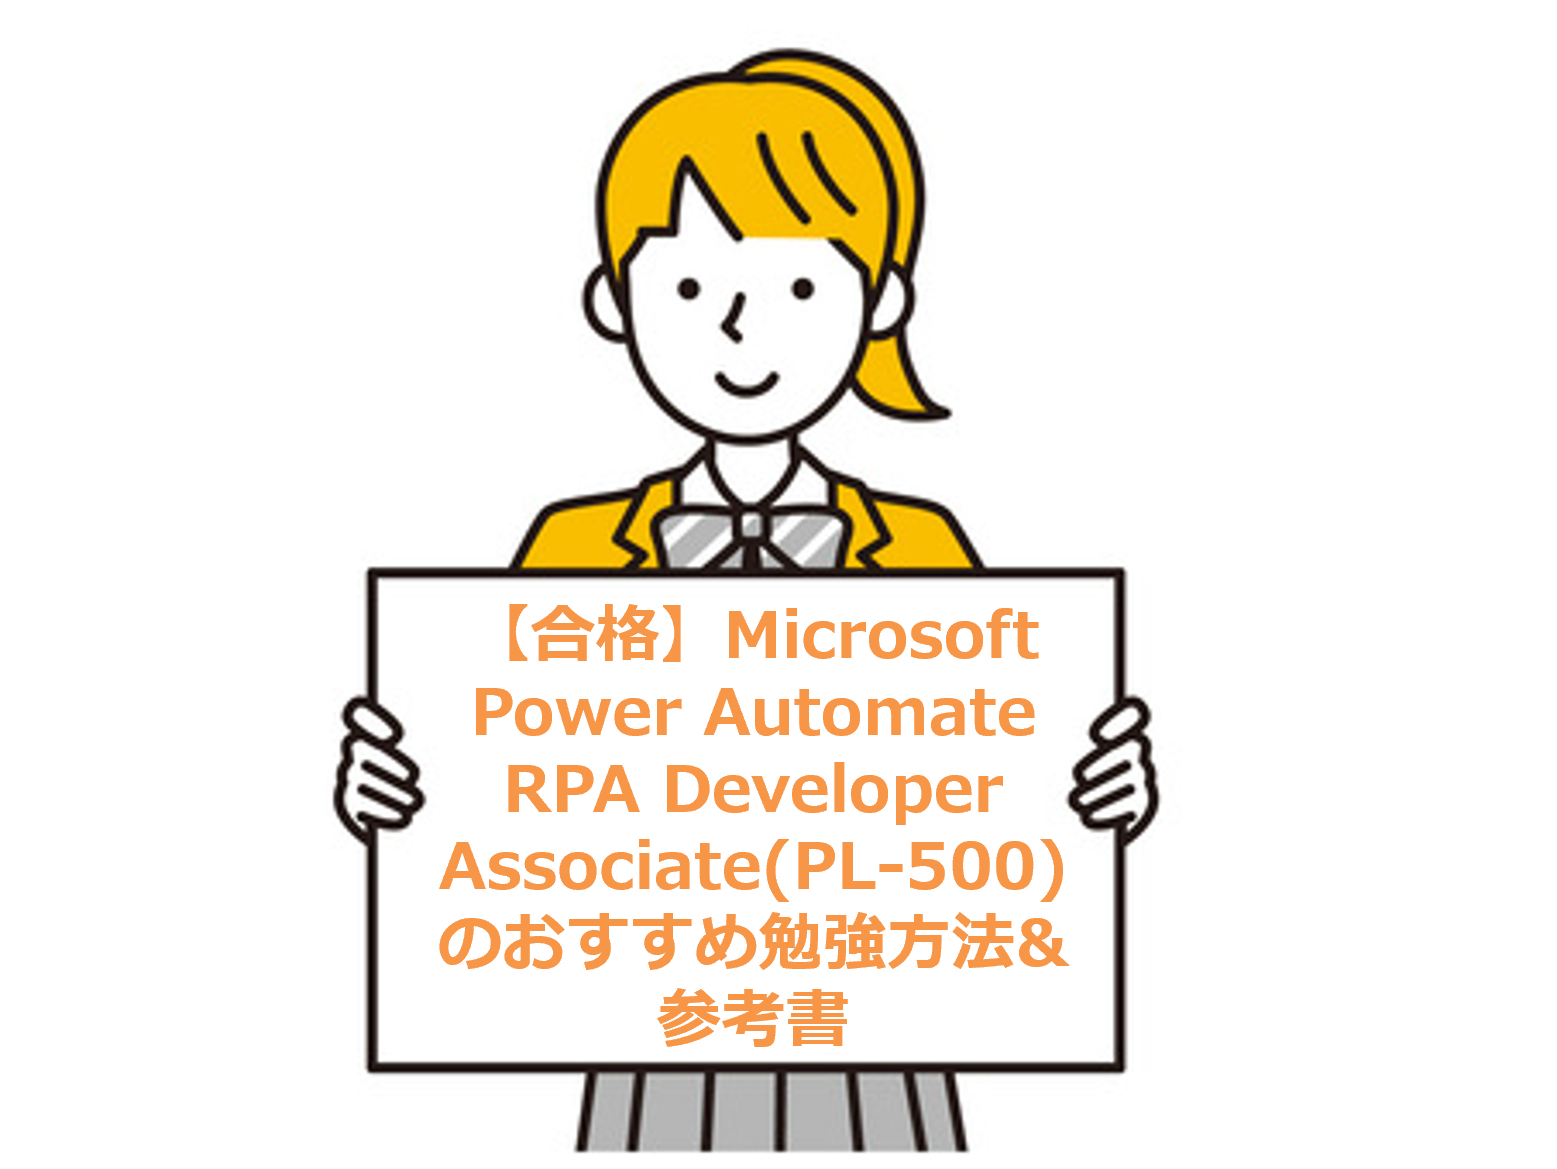 Microsoft Power Automate RPA Developer Associate